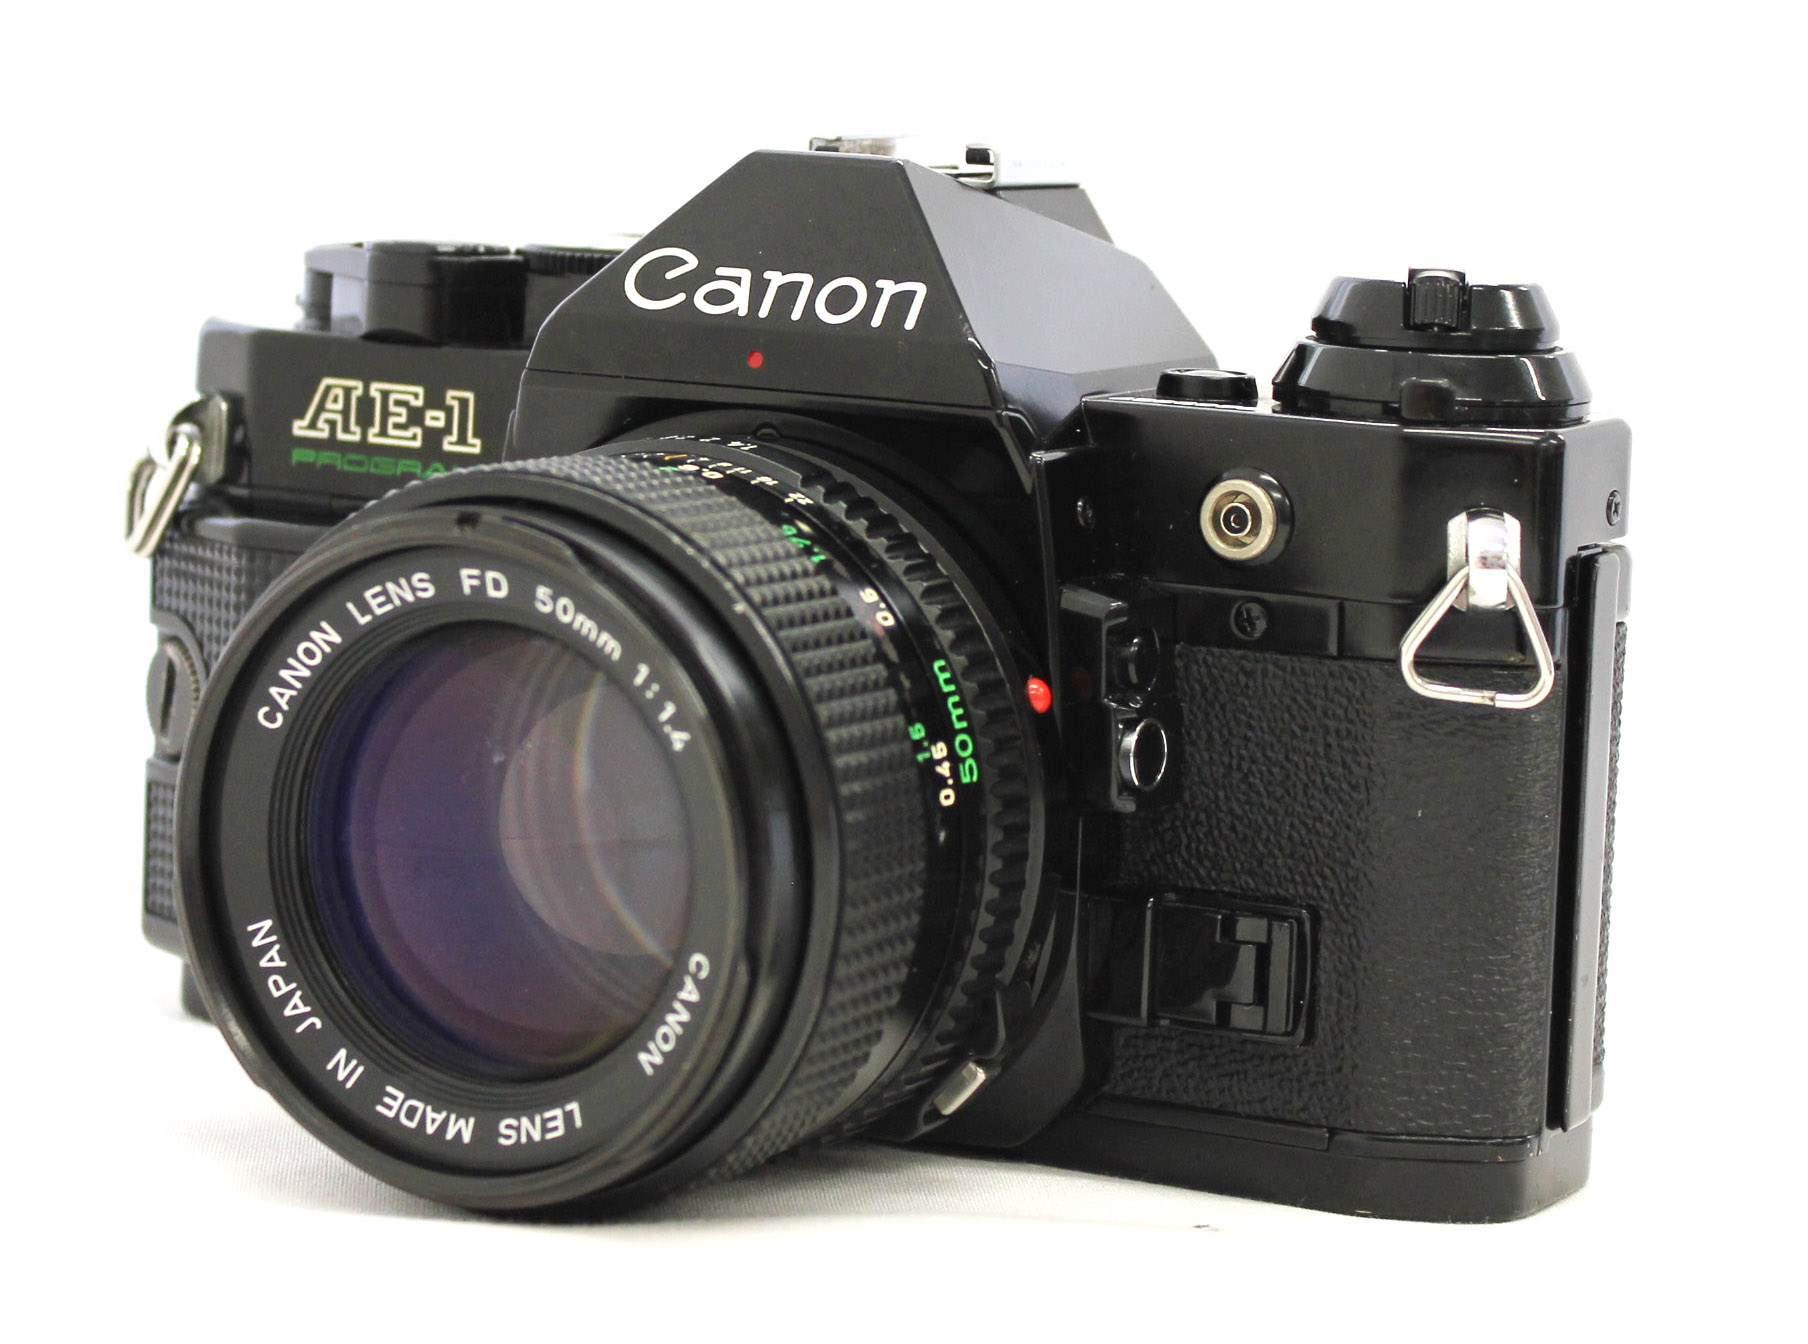 Overtuiging Aanstellen Zwitsers Canon AE-1 Program 35mm SLR Film Camera Black with New FD 50mm F/1.4 Lens  from Japan (C1840) | Big Fish J-Camera (Big Fish J-Shop)